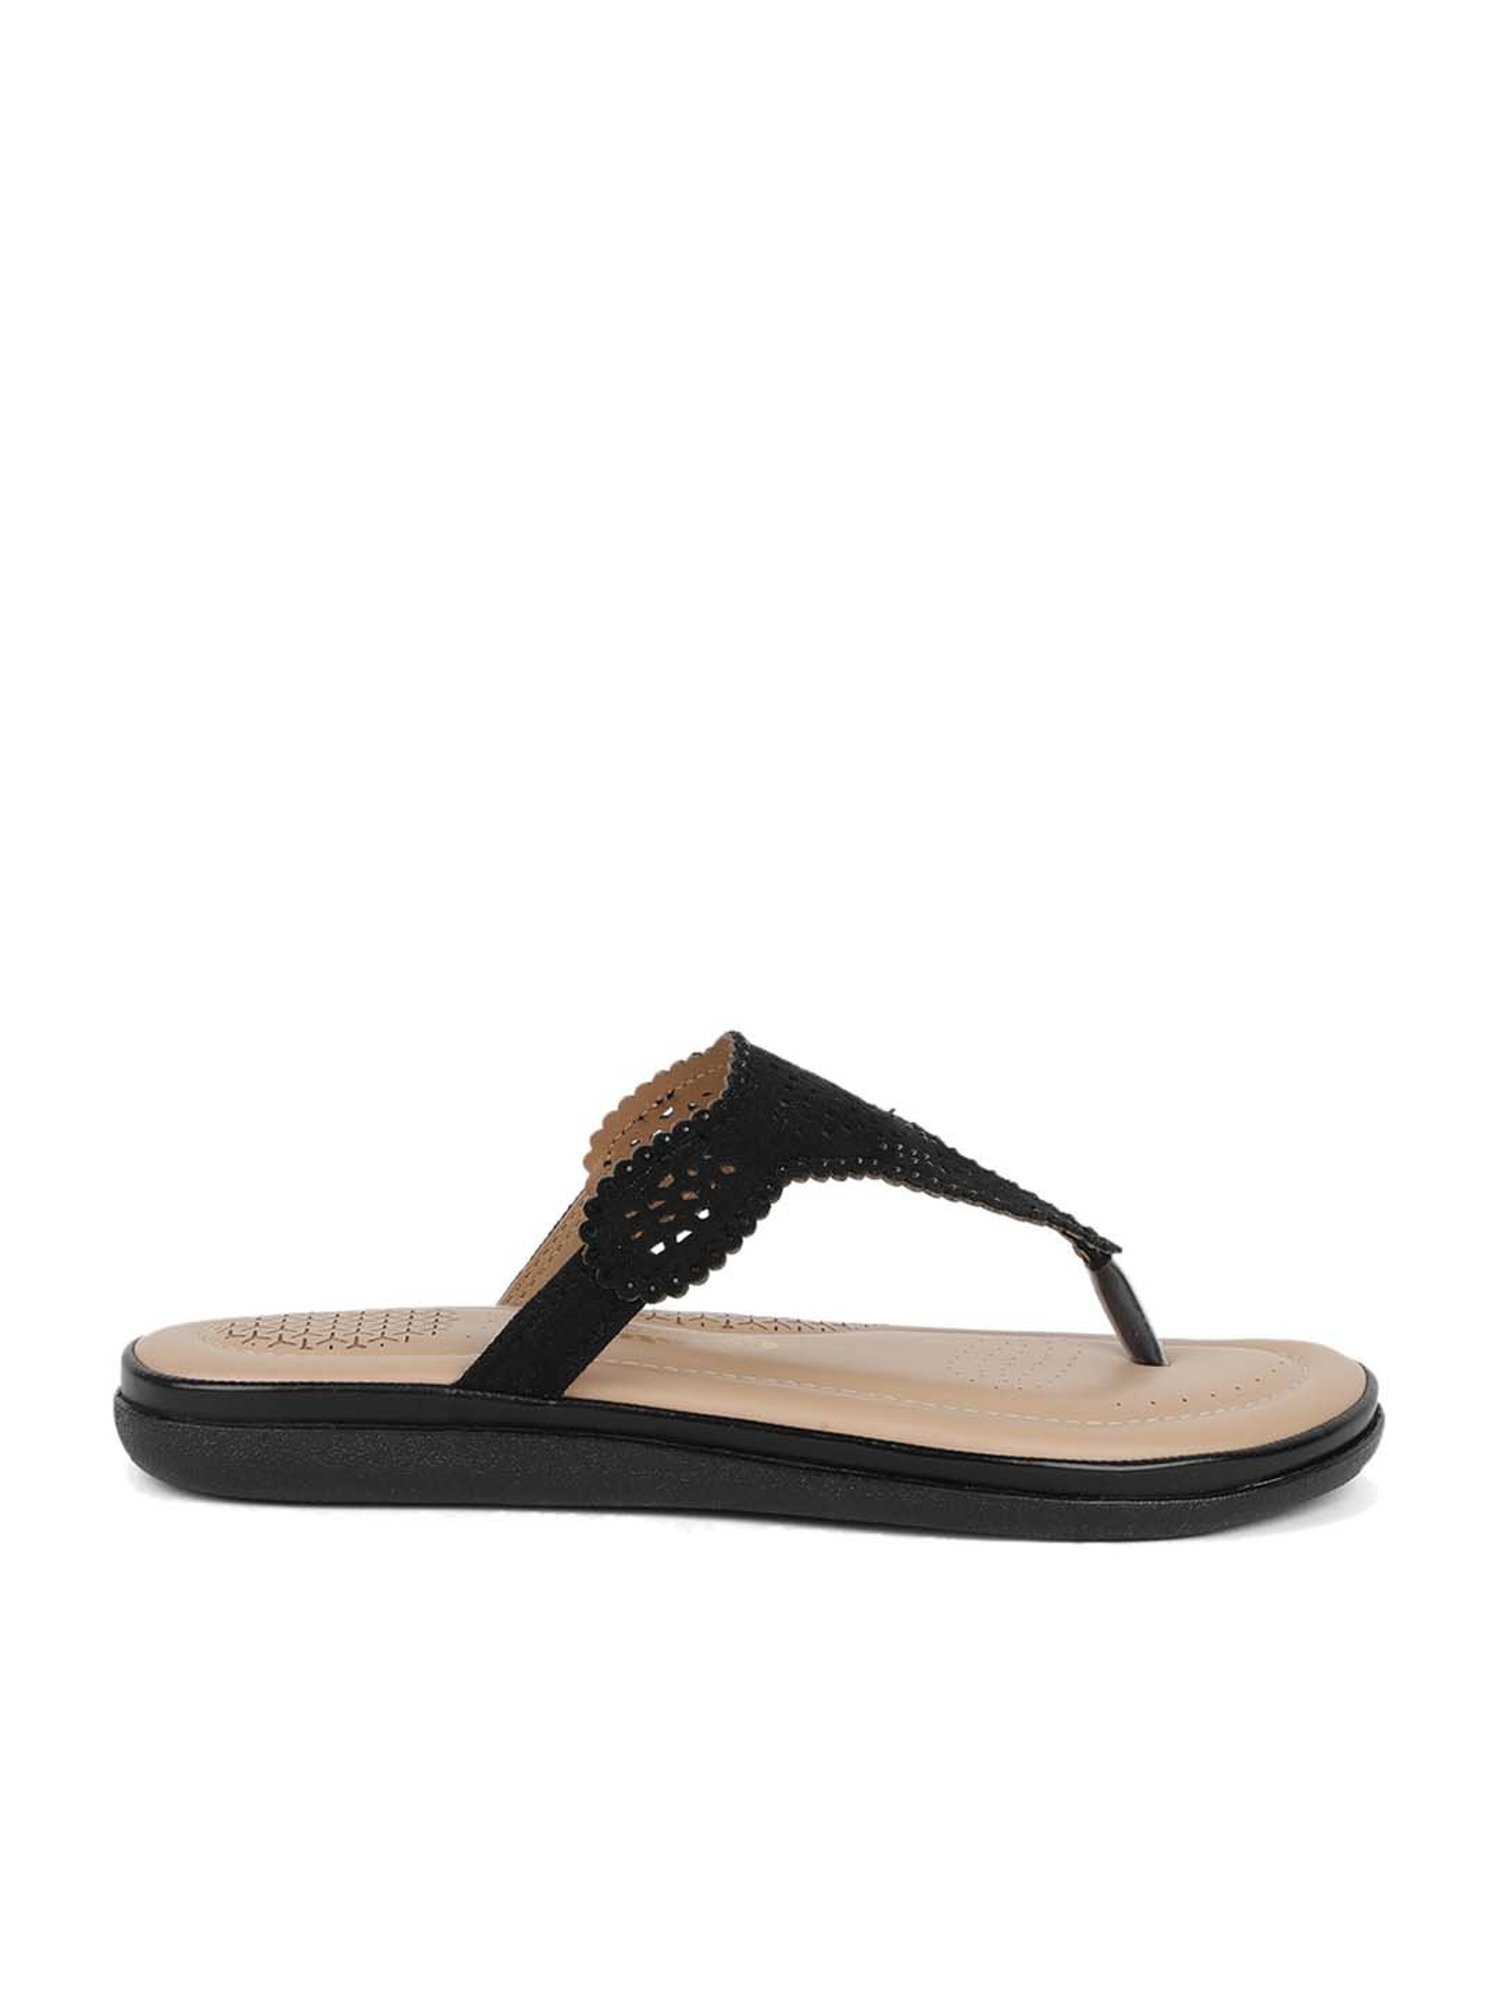 Buy Bata Penny Laser Tan Thong Sandals for Women at Best Price @ Tata CLiQ